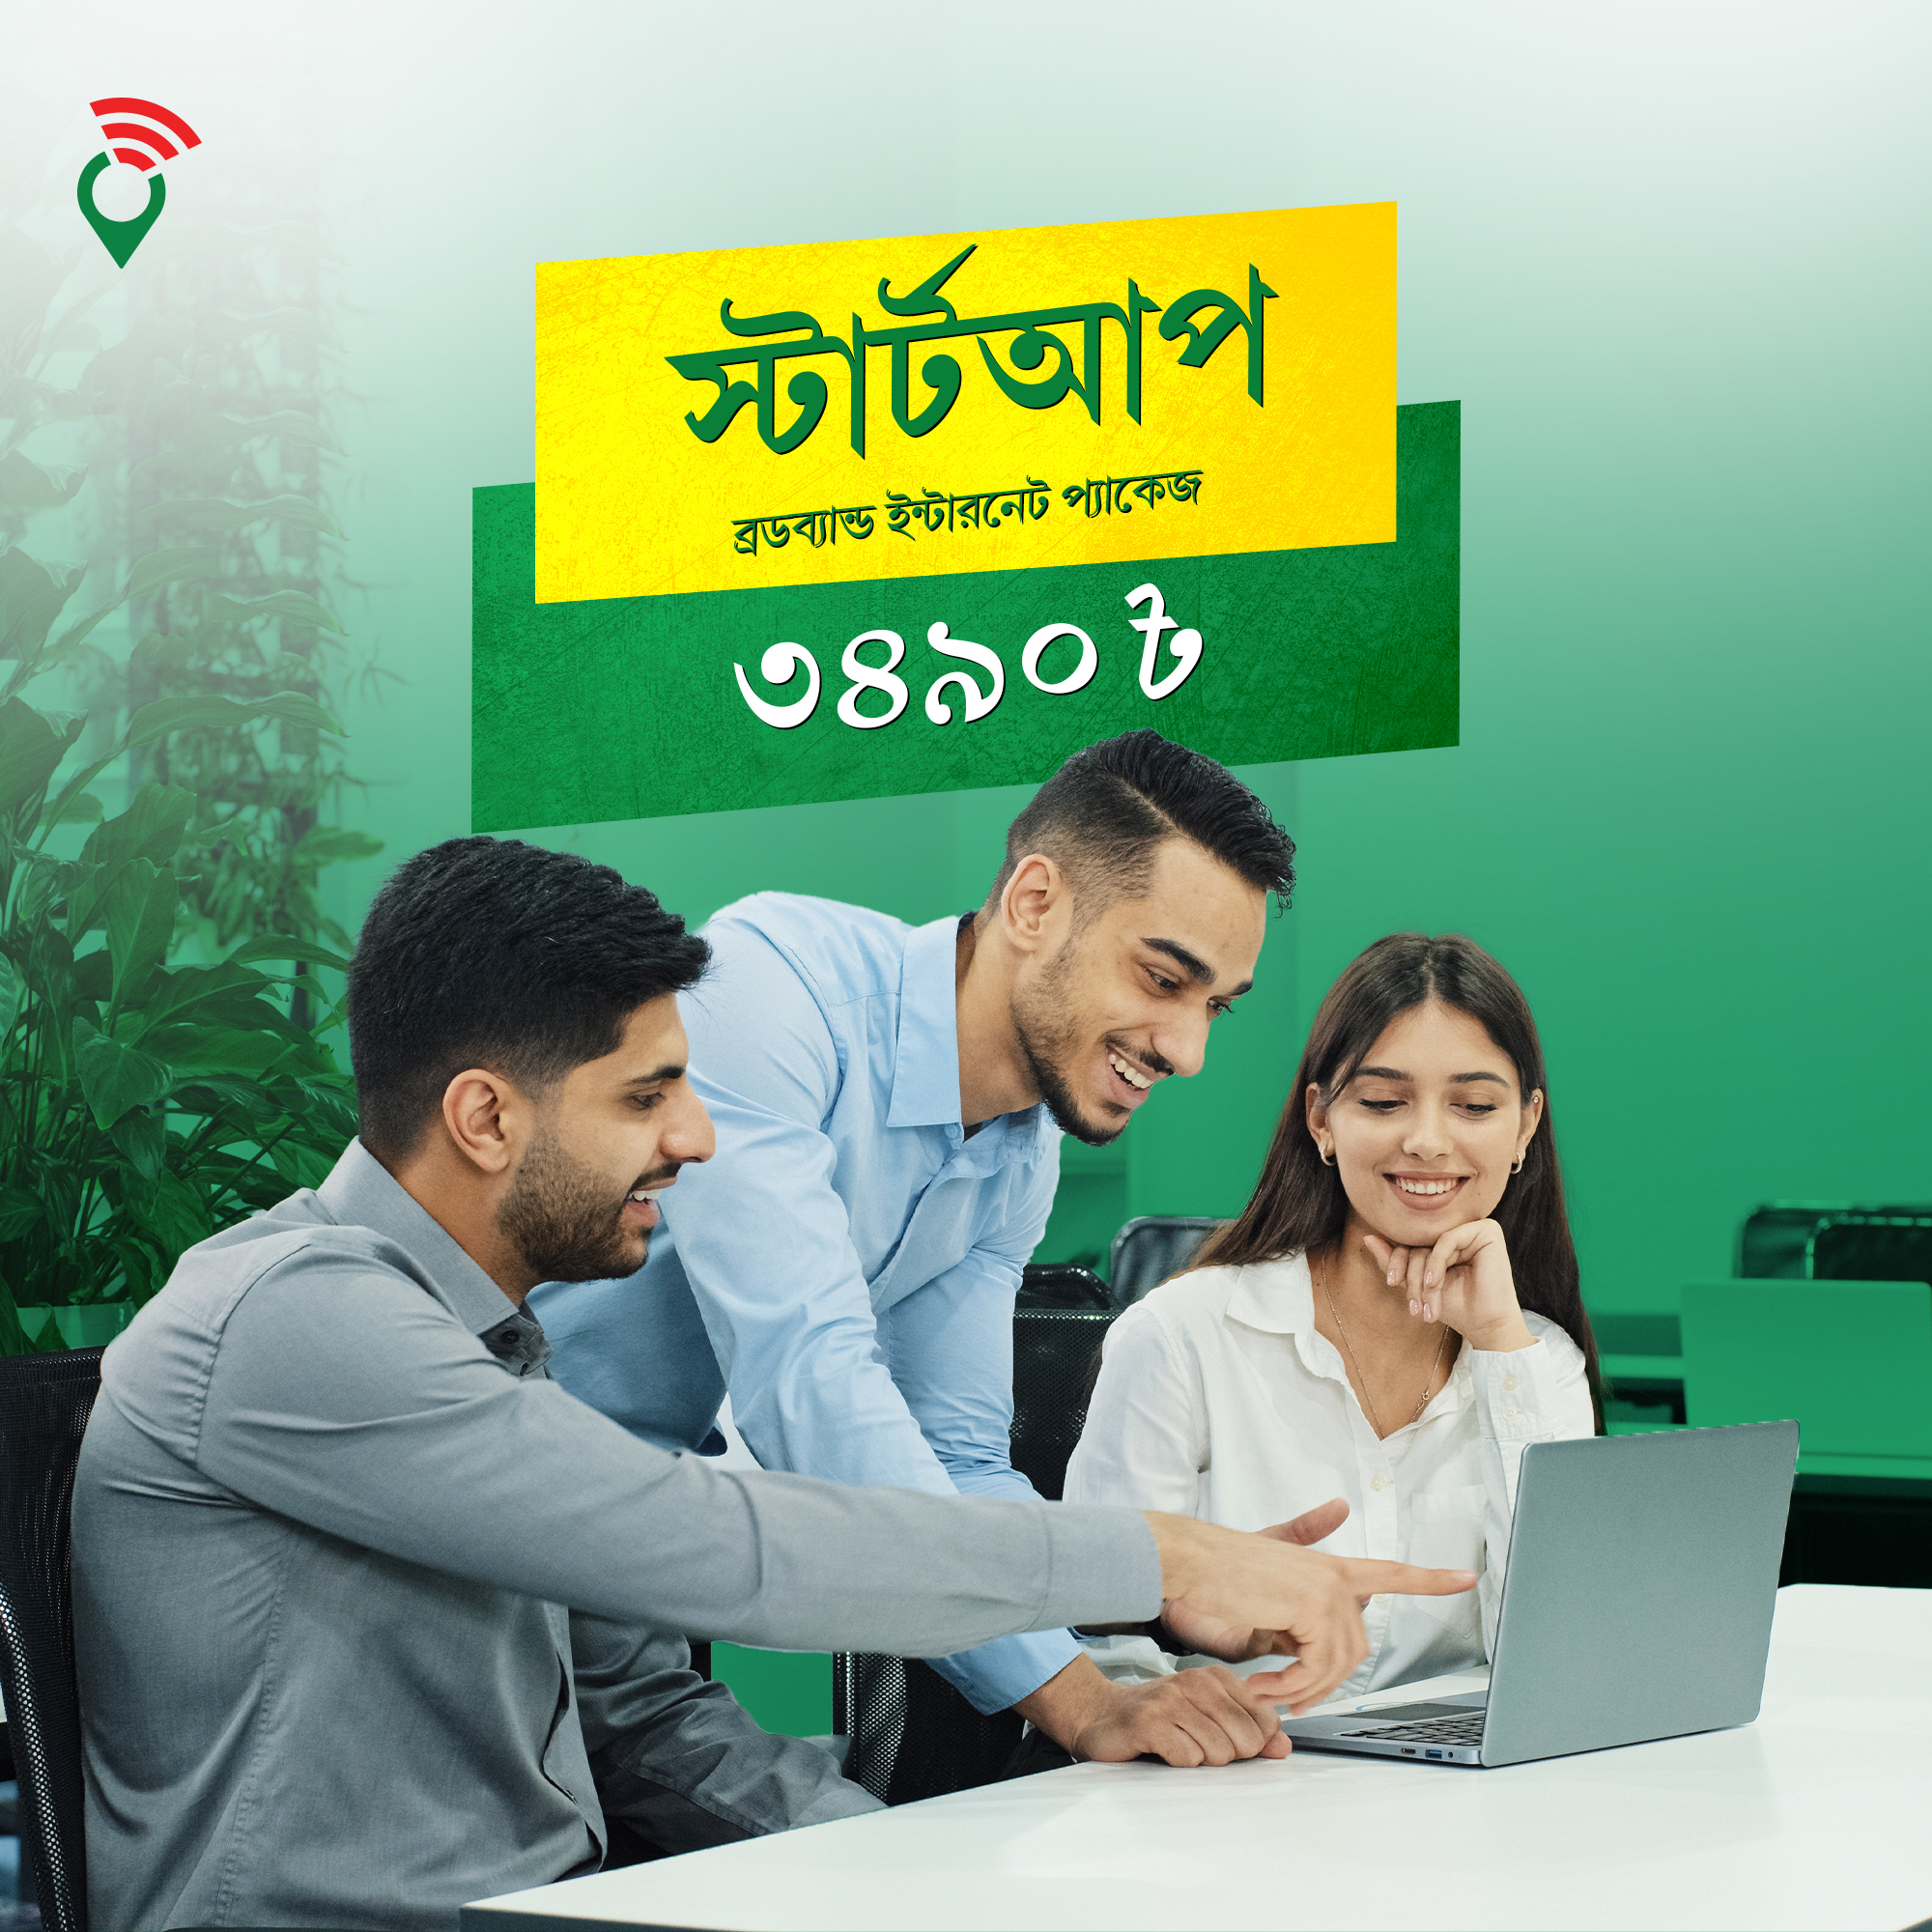 Best Startup Broadband internet package in Bangladesh